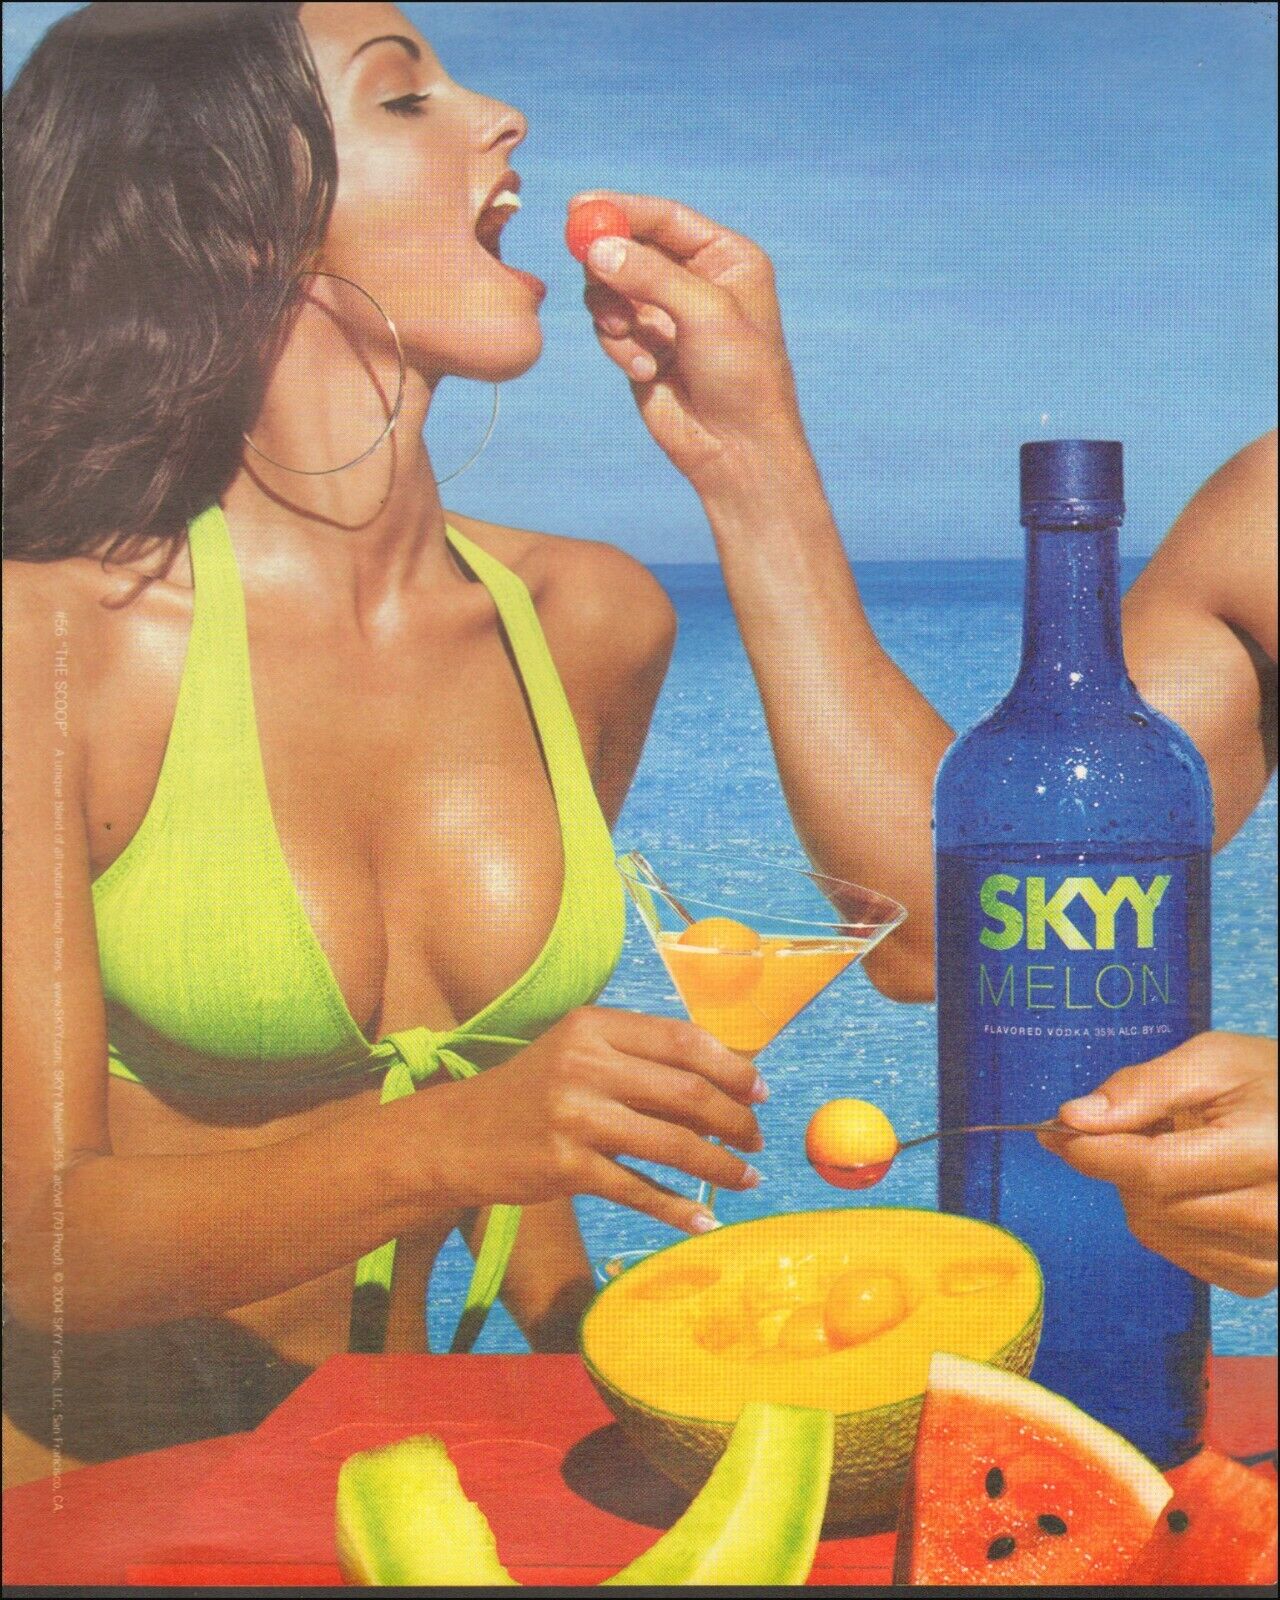 2004 Print ad for SKYY Melon Vodka`Sexy Model Ocean Alcohol Jewelry      031820